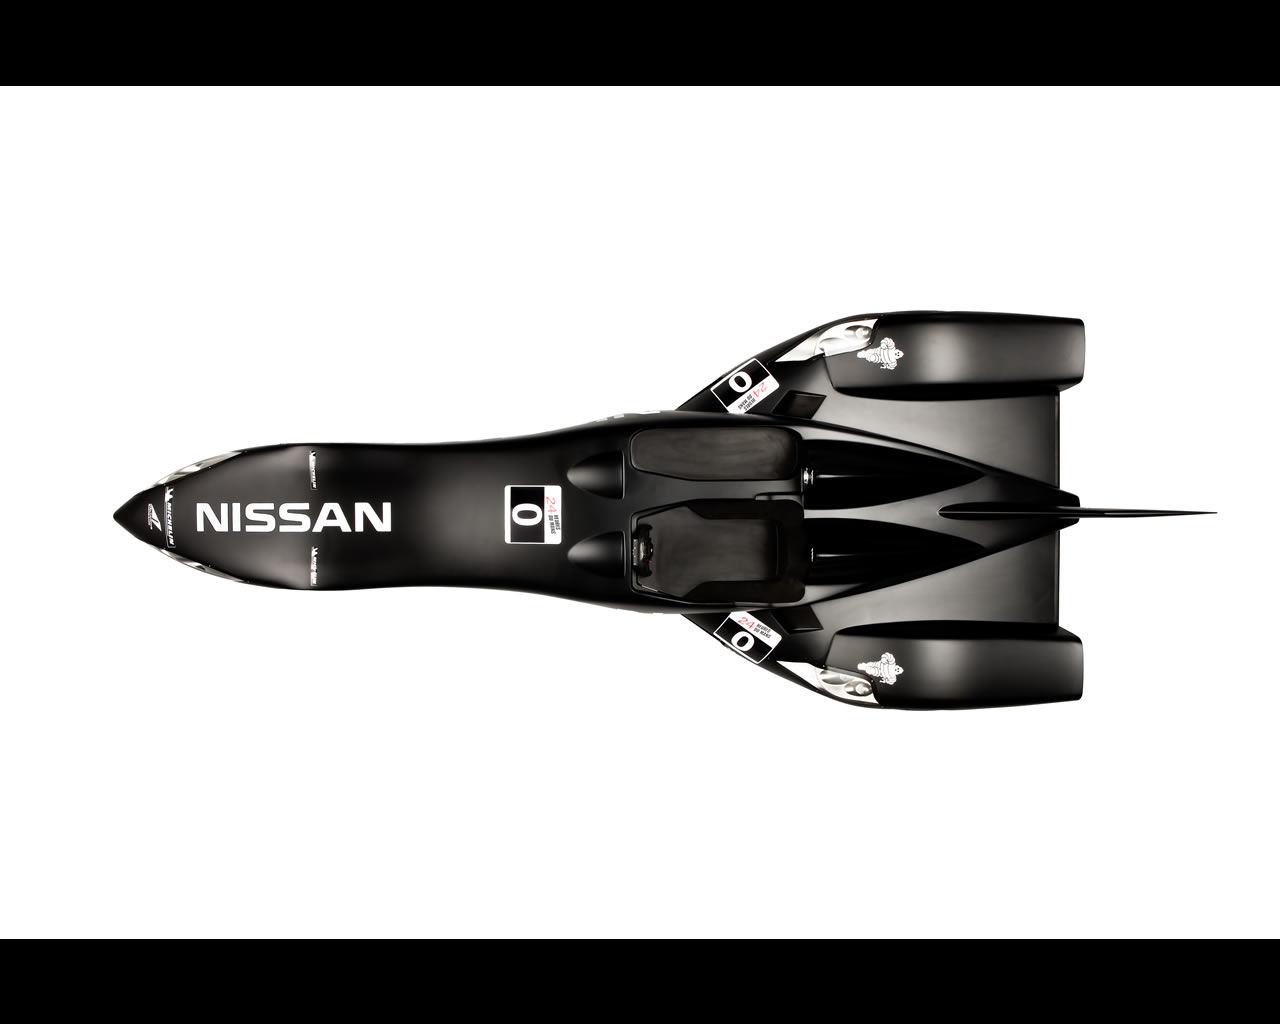 Nissan prototype race car